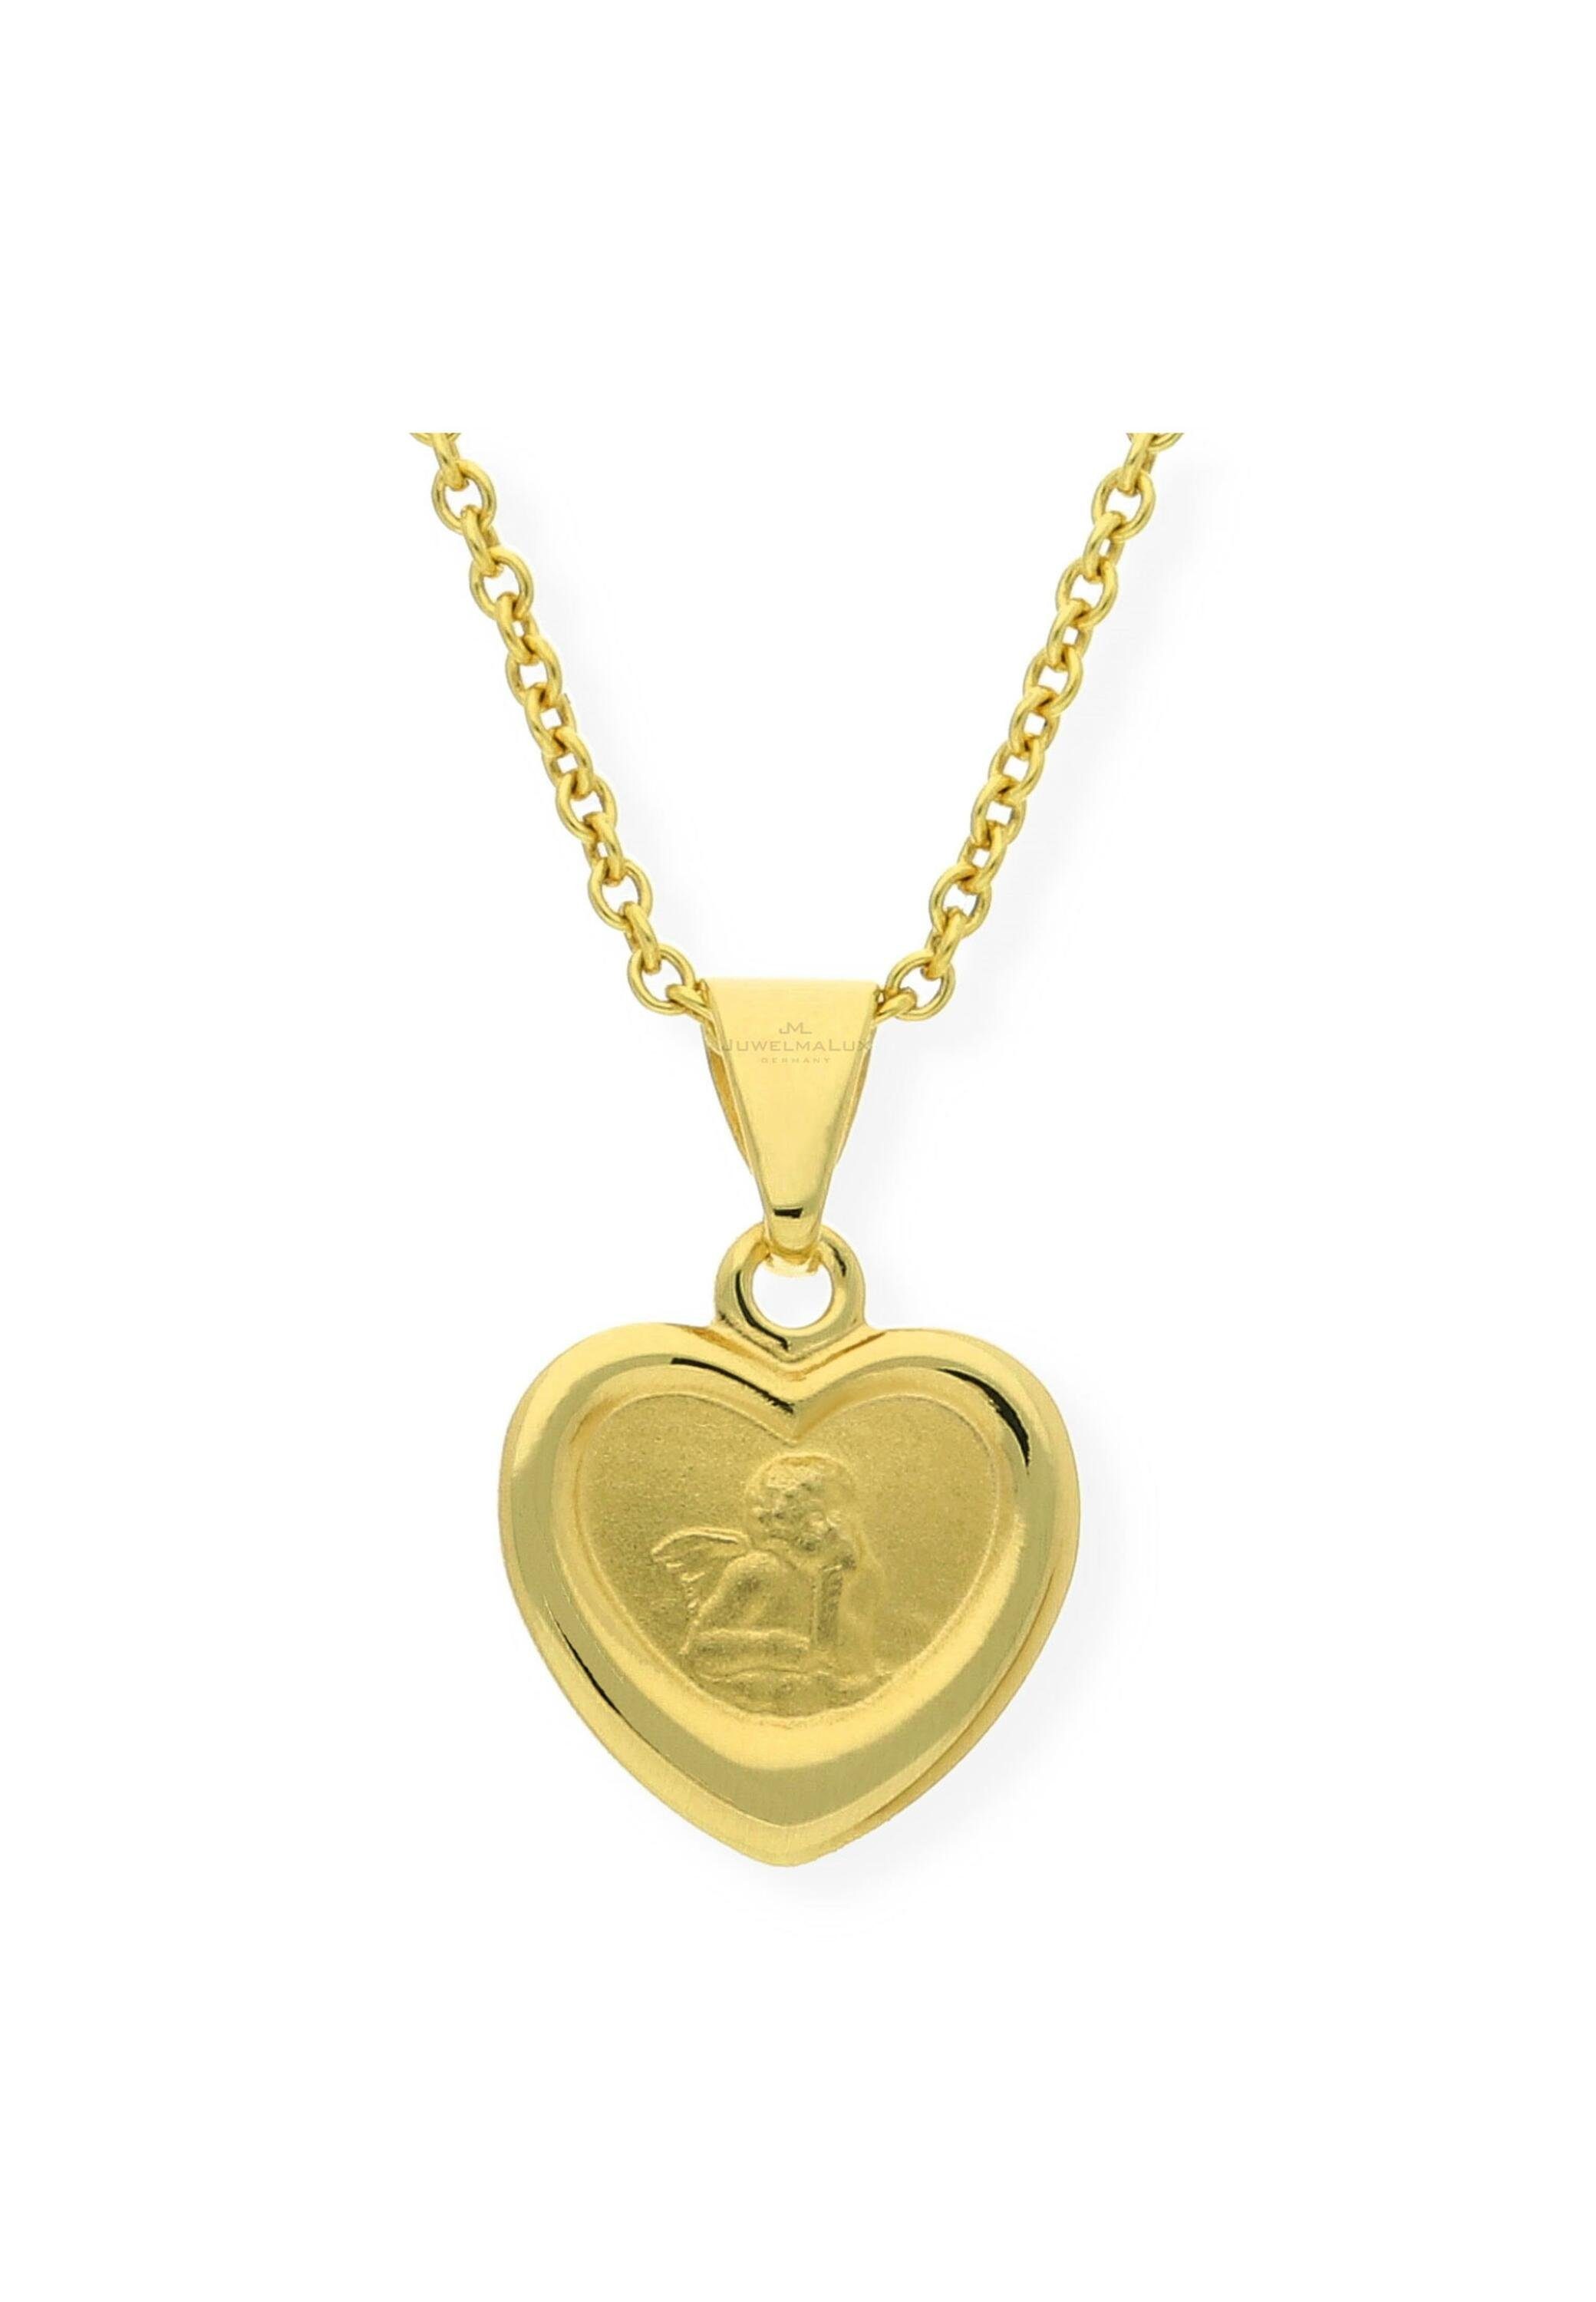 JuwelmaLux Engelanhänger Schutzengel Herz Anhänger 333/000 (8 Karat) Gold, ohne Kette, inkl. Schmuckschachtel